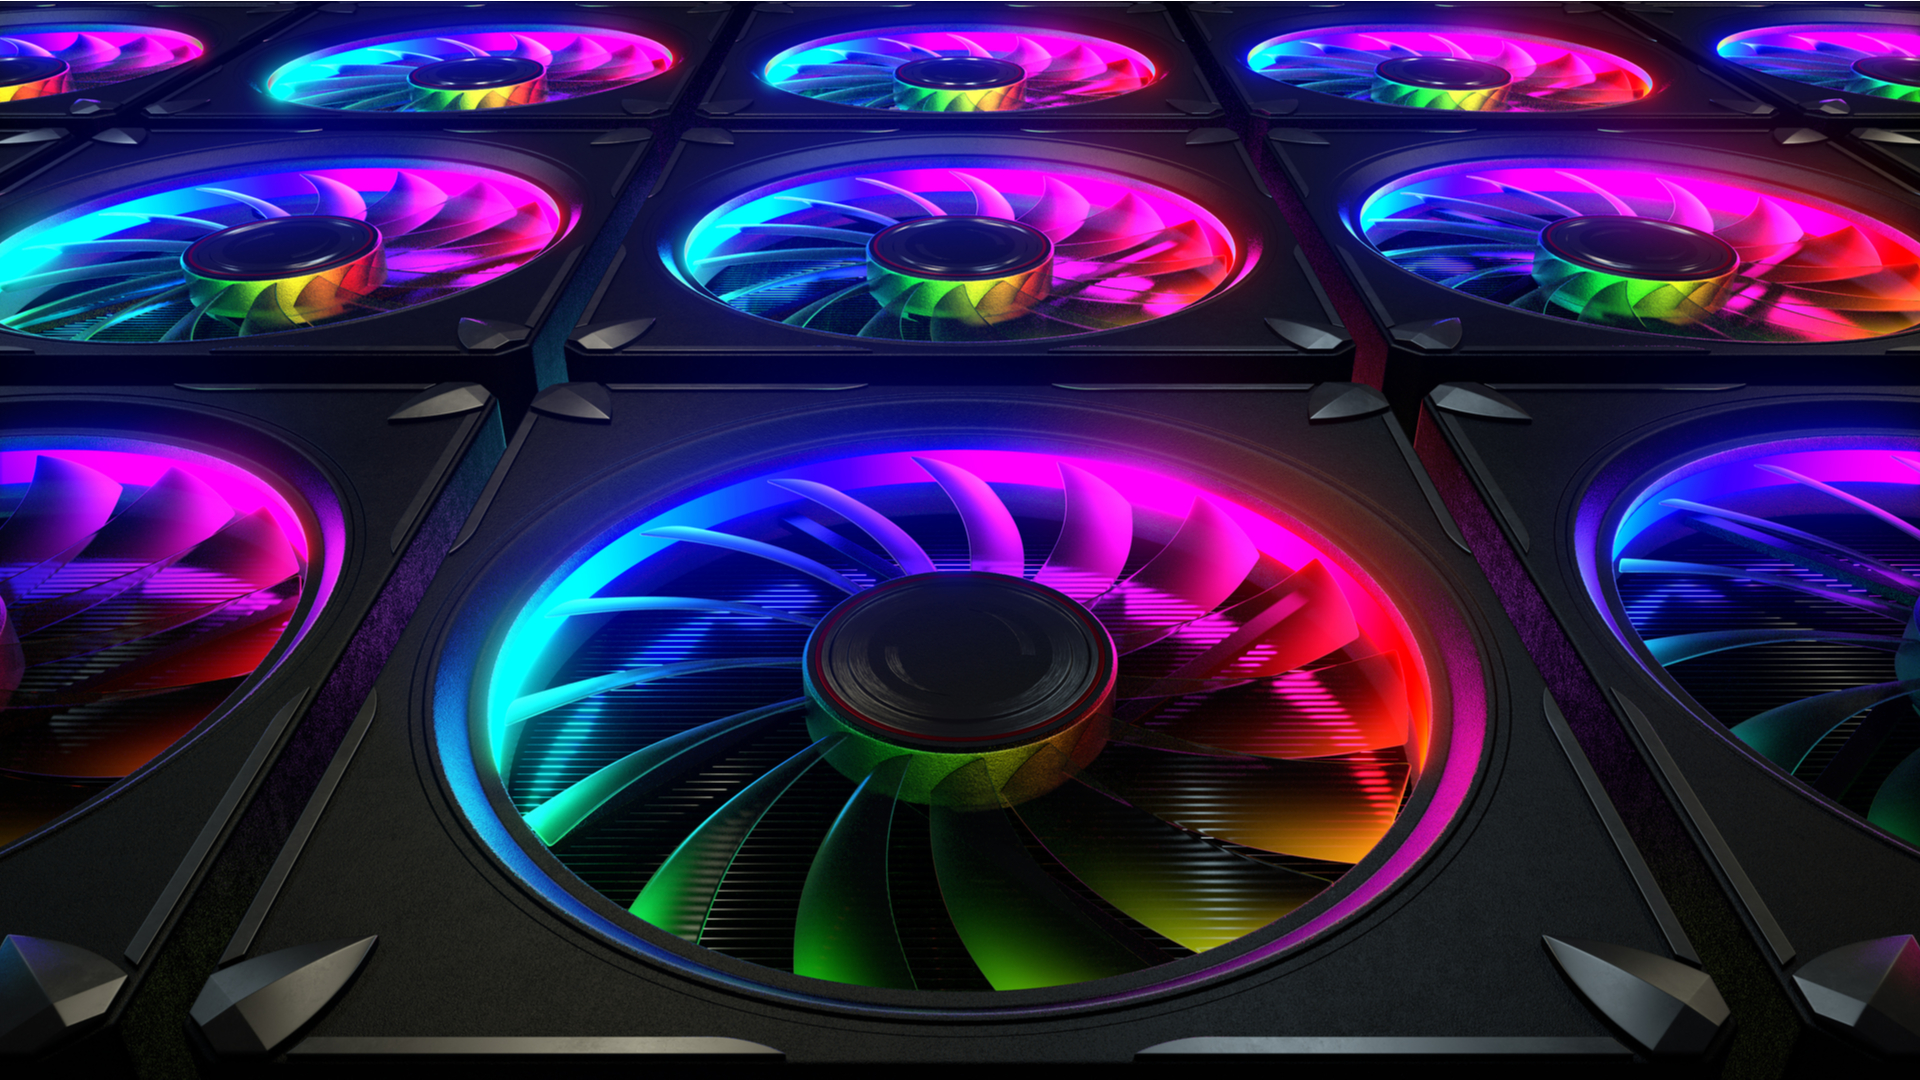 RGB computer fans